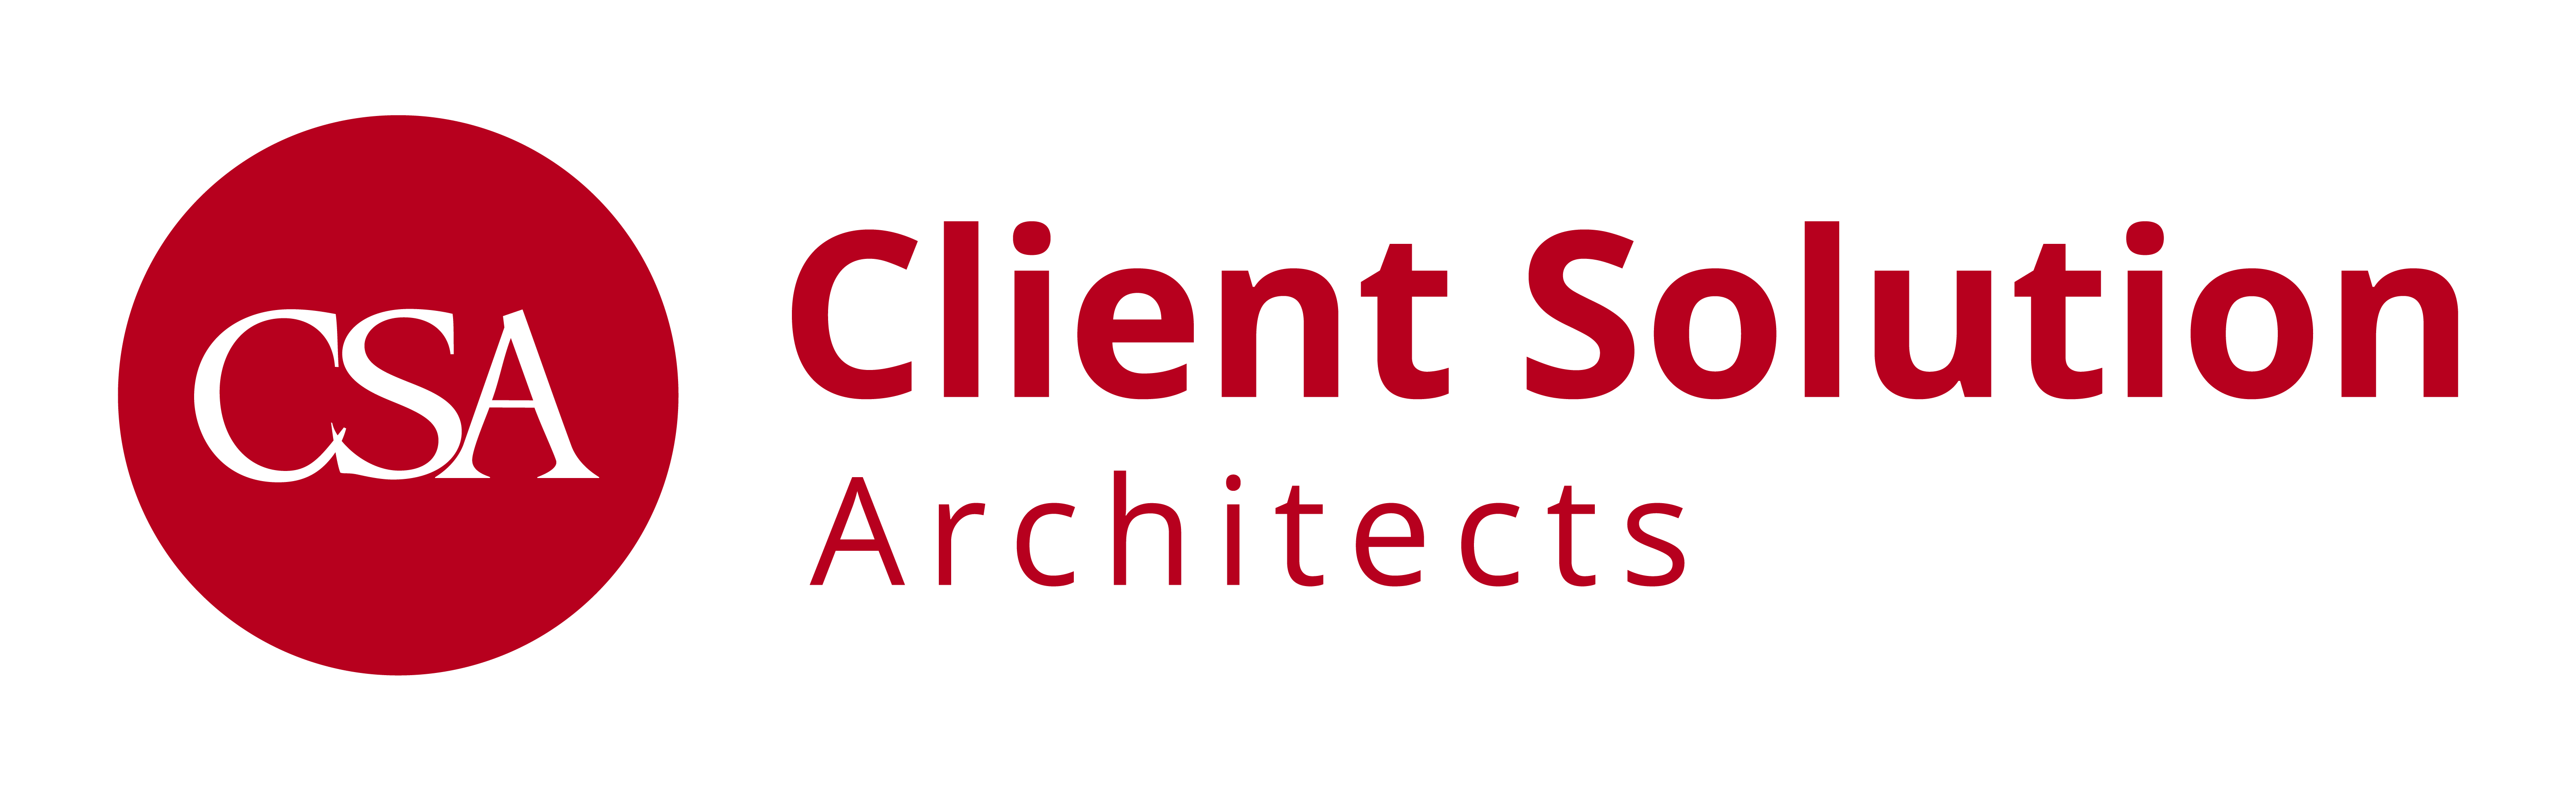 Client Solution Architects (CSA) logo